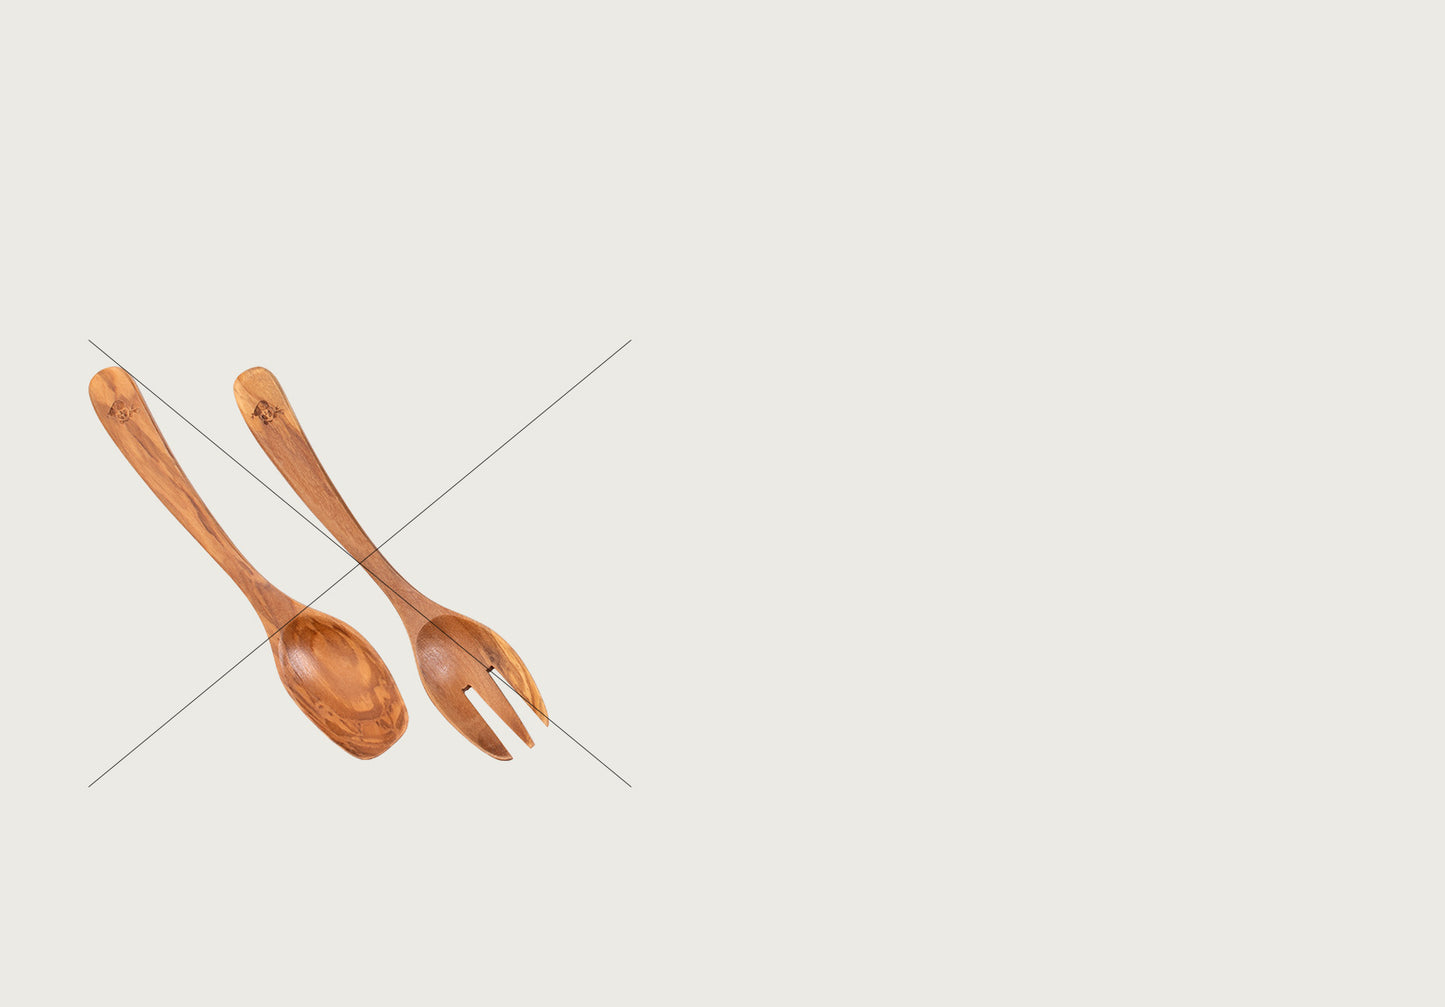 Little Hands, Big Impact: Olive Wood Kids’ Cutlery Set